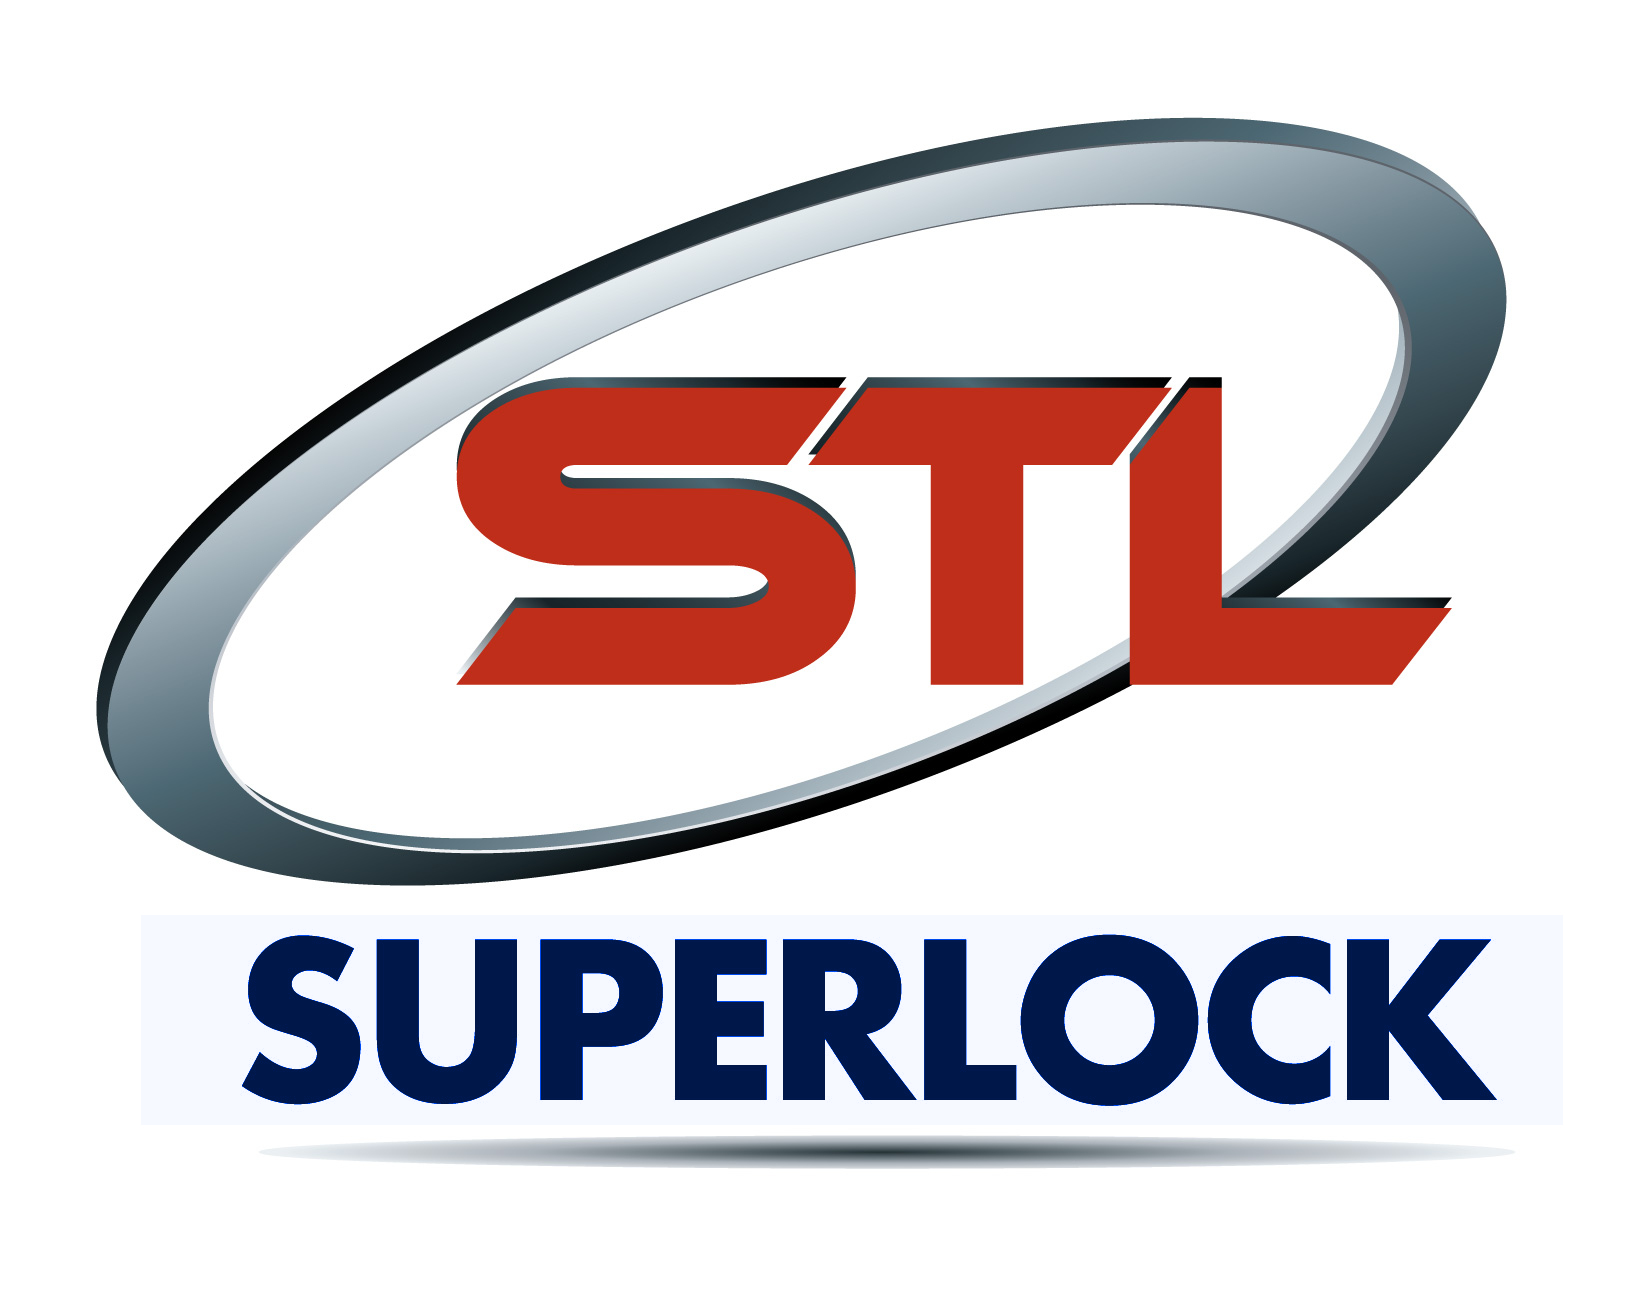 Superlock Technologies Limited